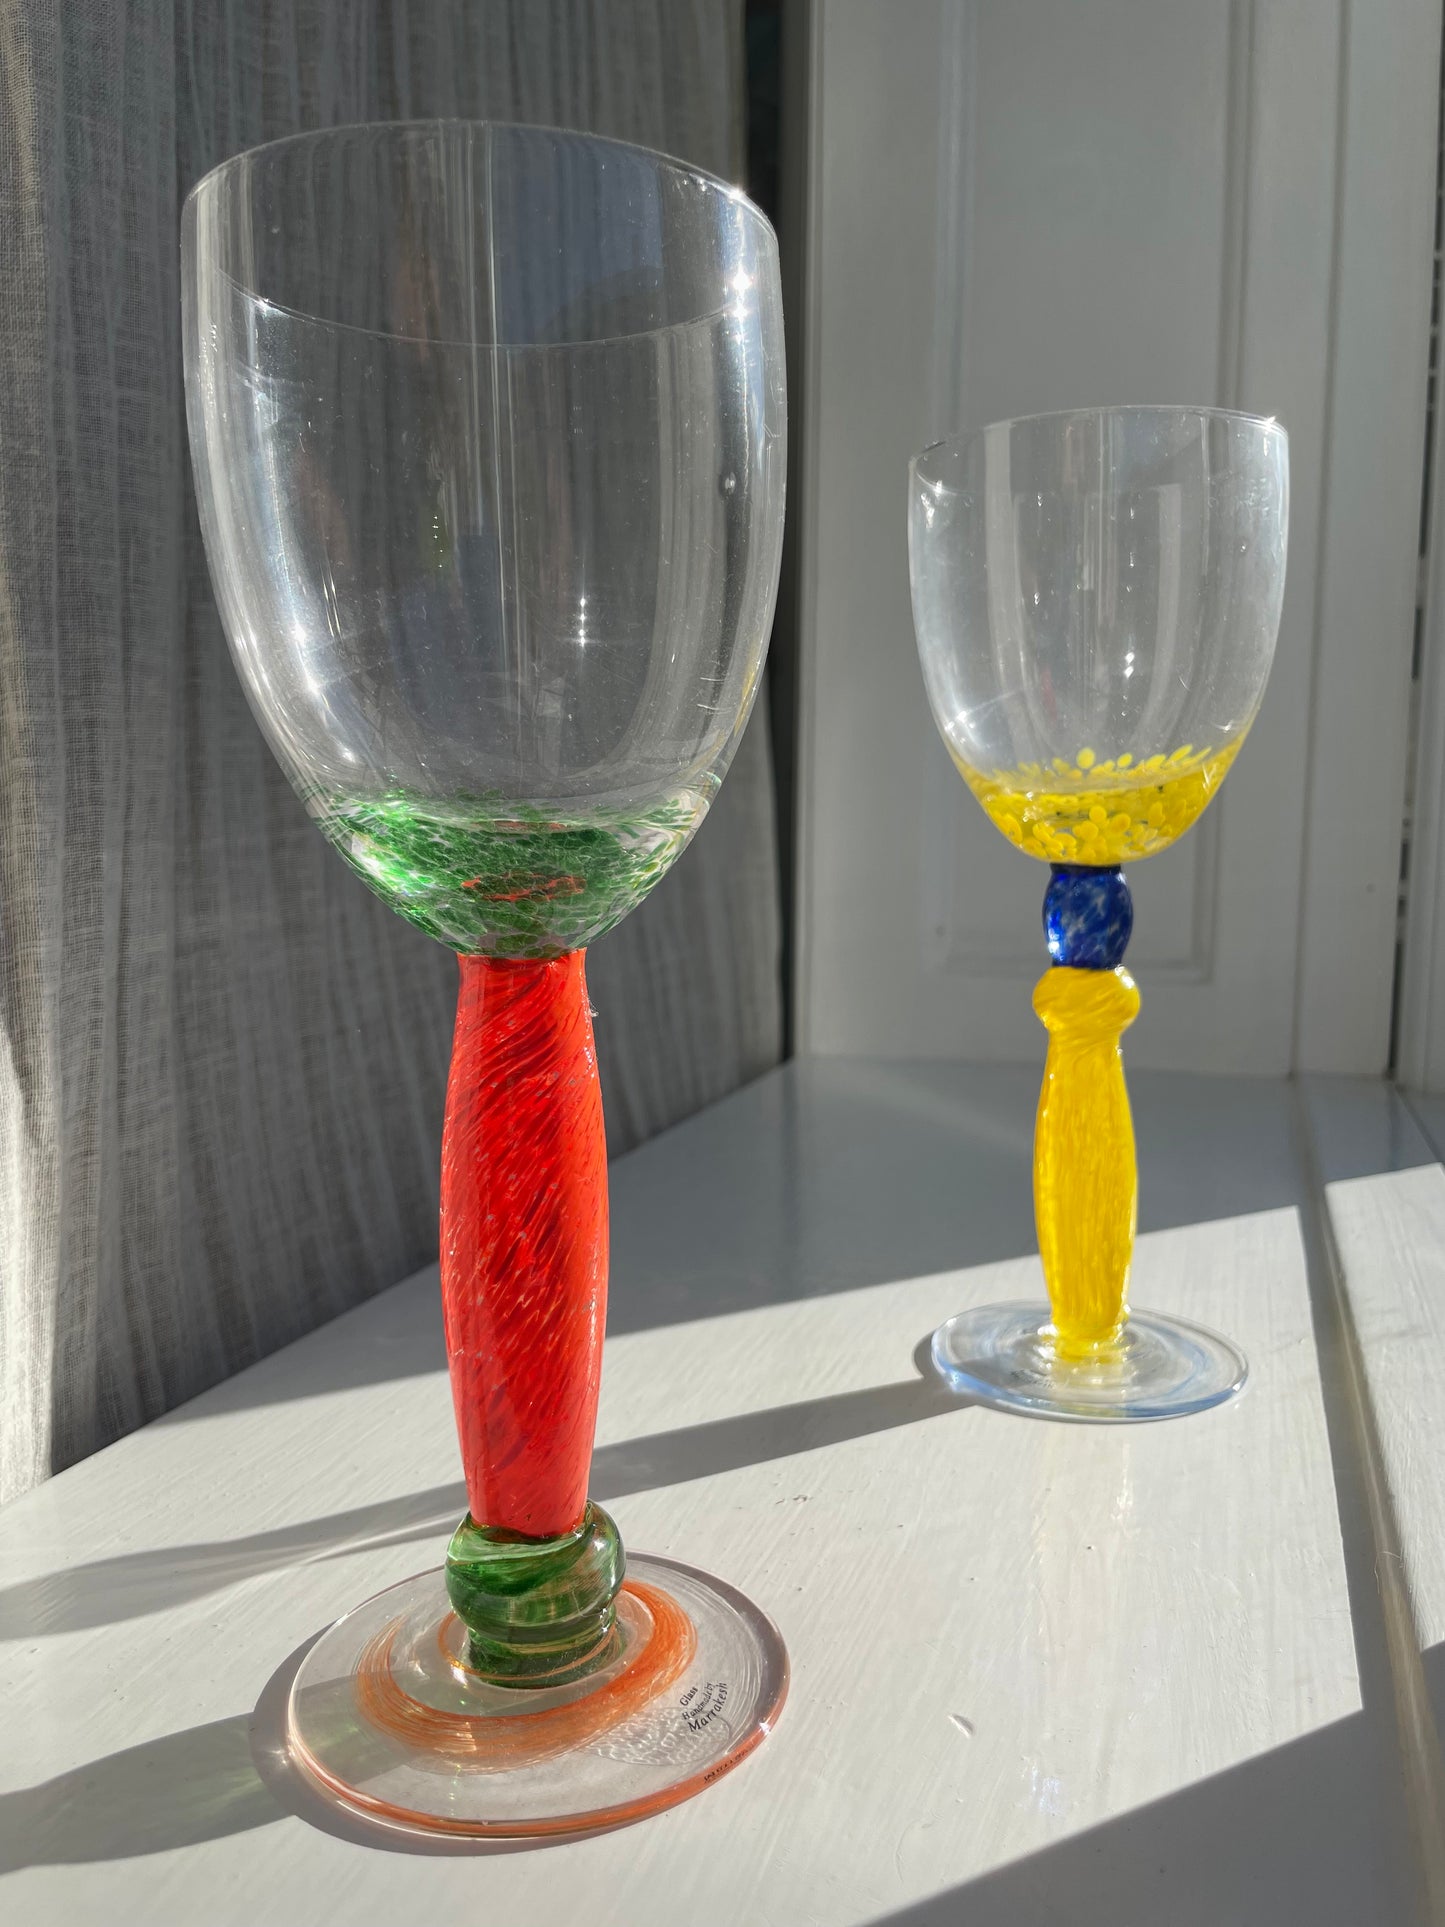 Set of two handmade wine glasses